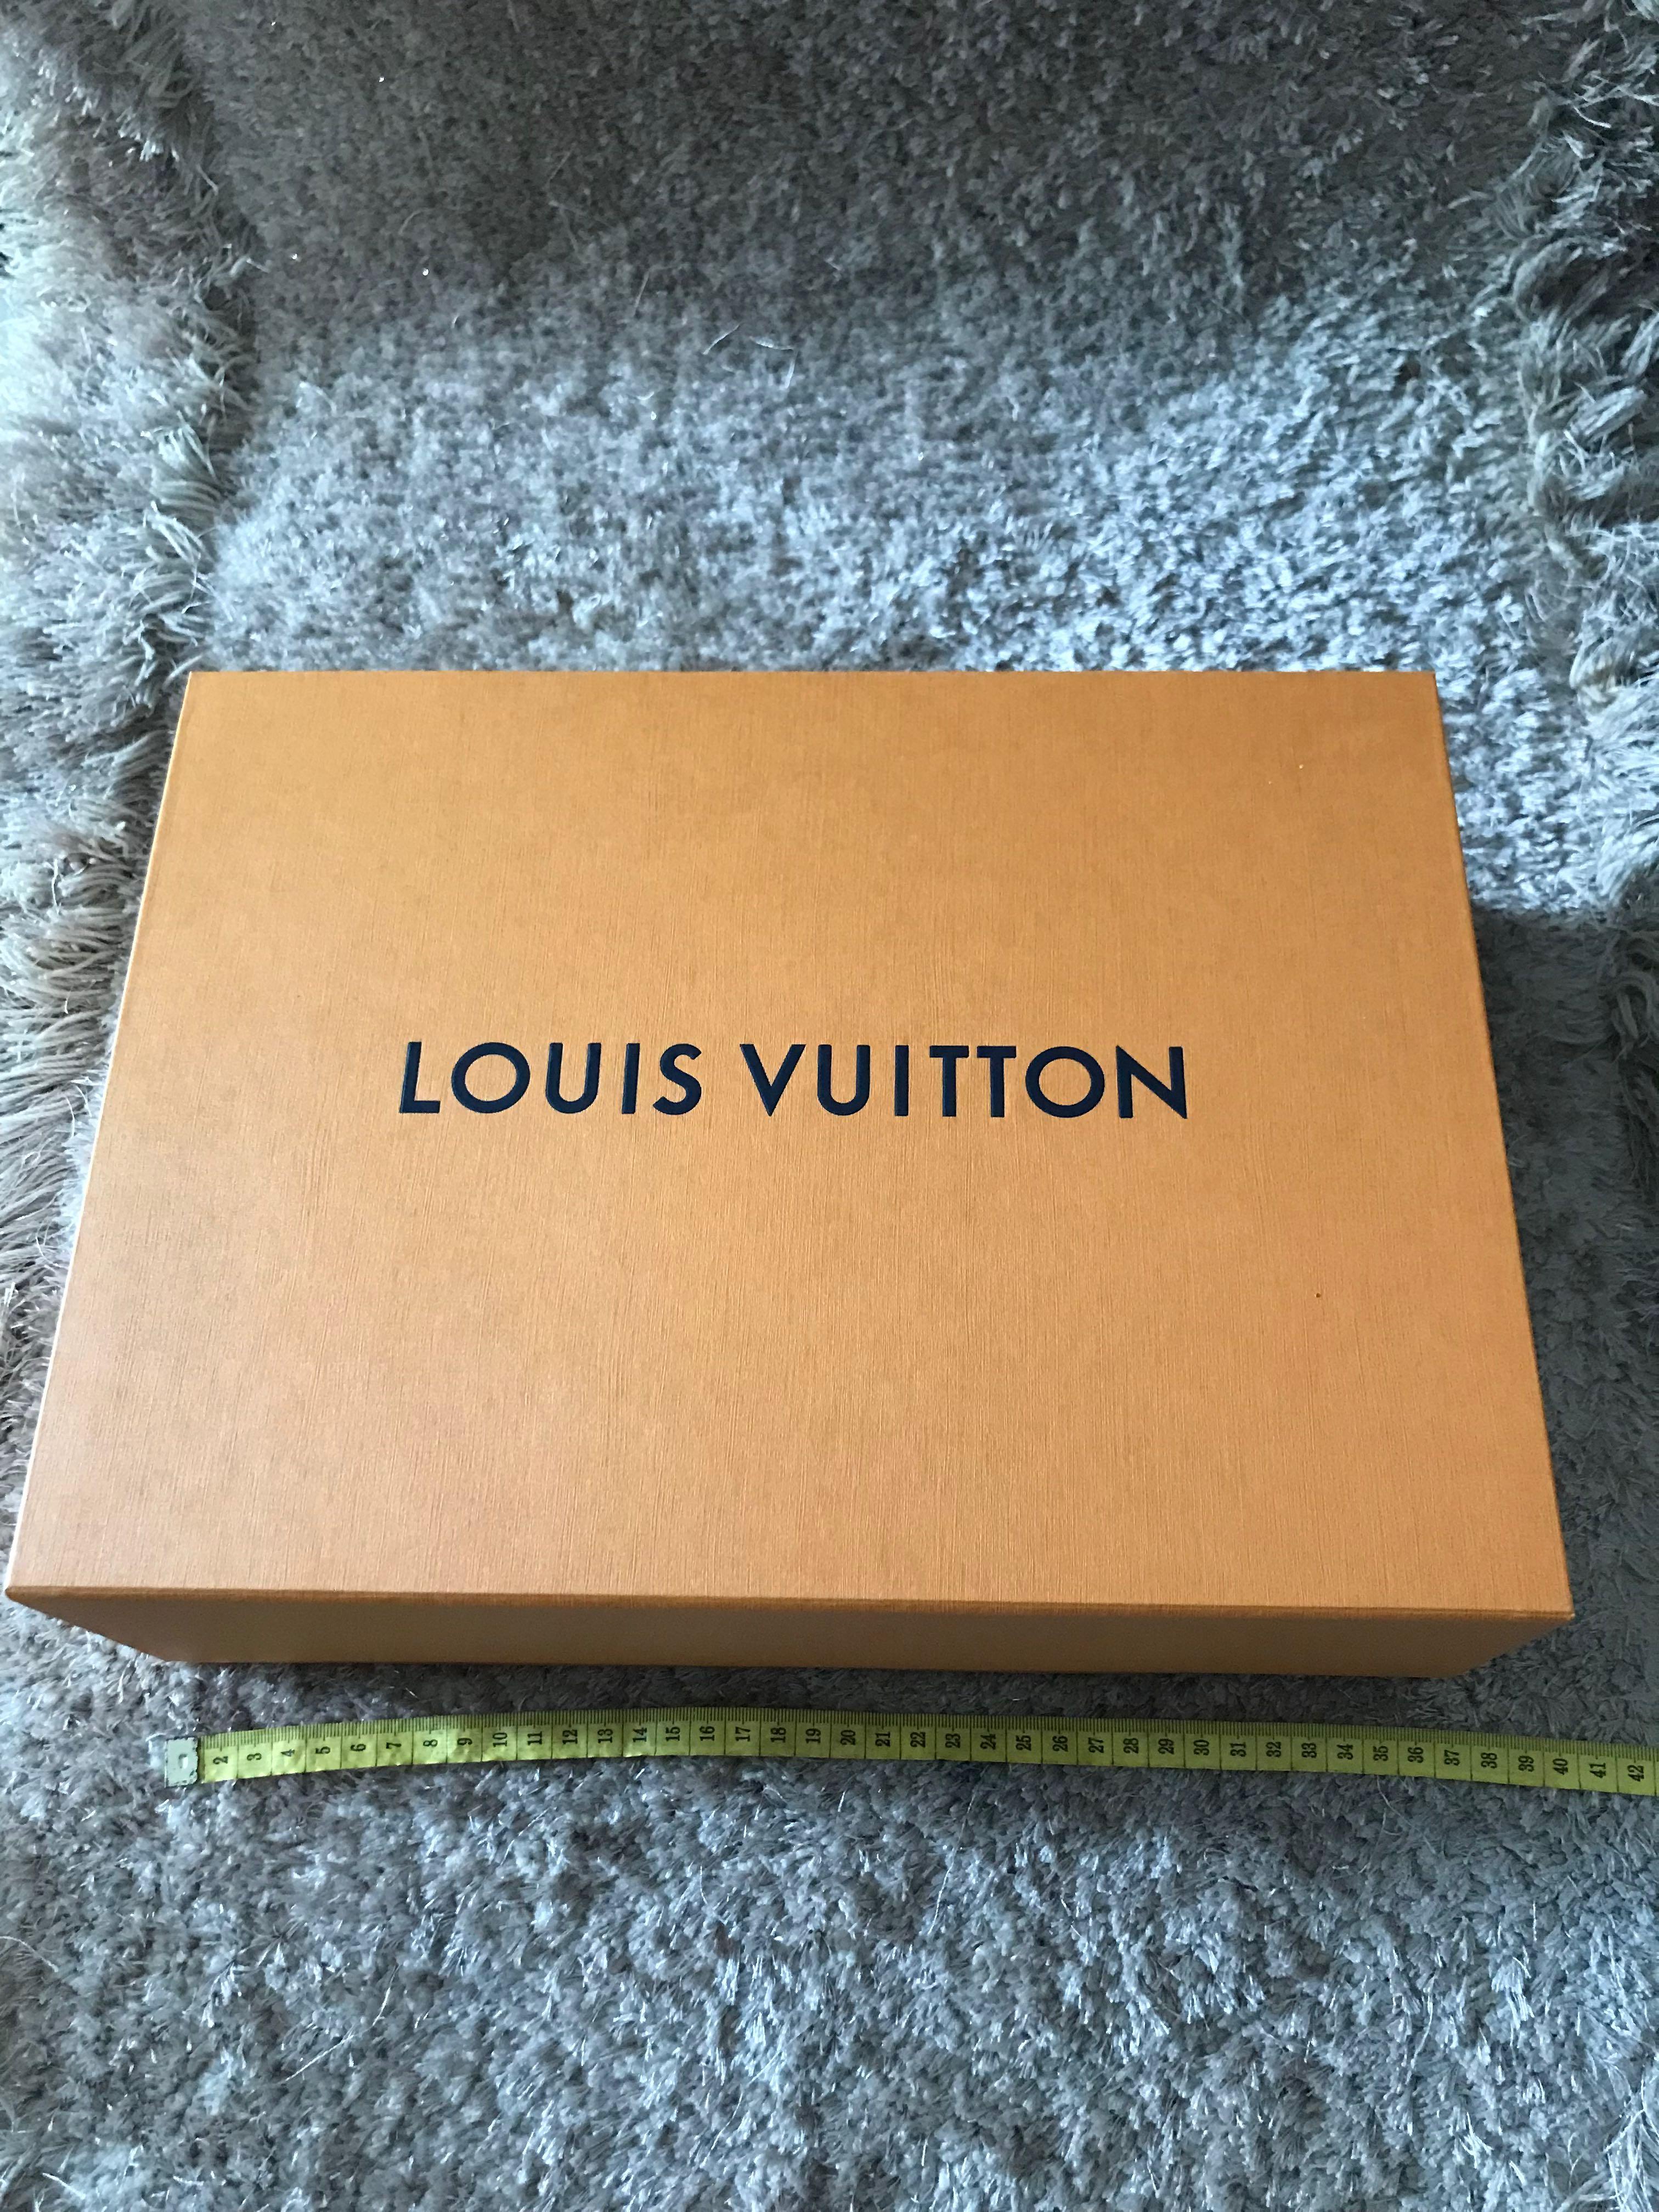 Jual LV Louis Vuitton Box Original Authentic Kotak Tas